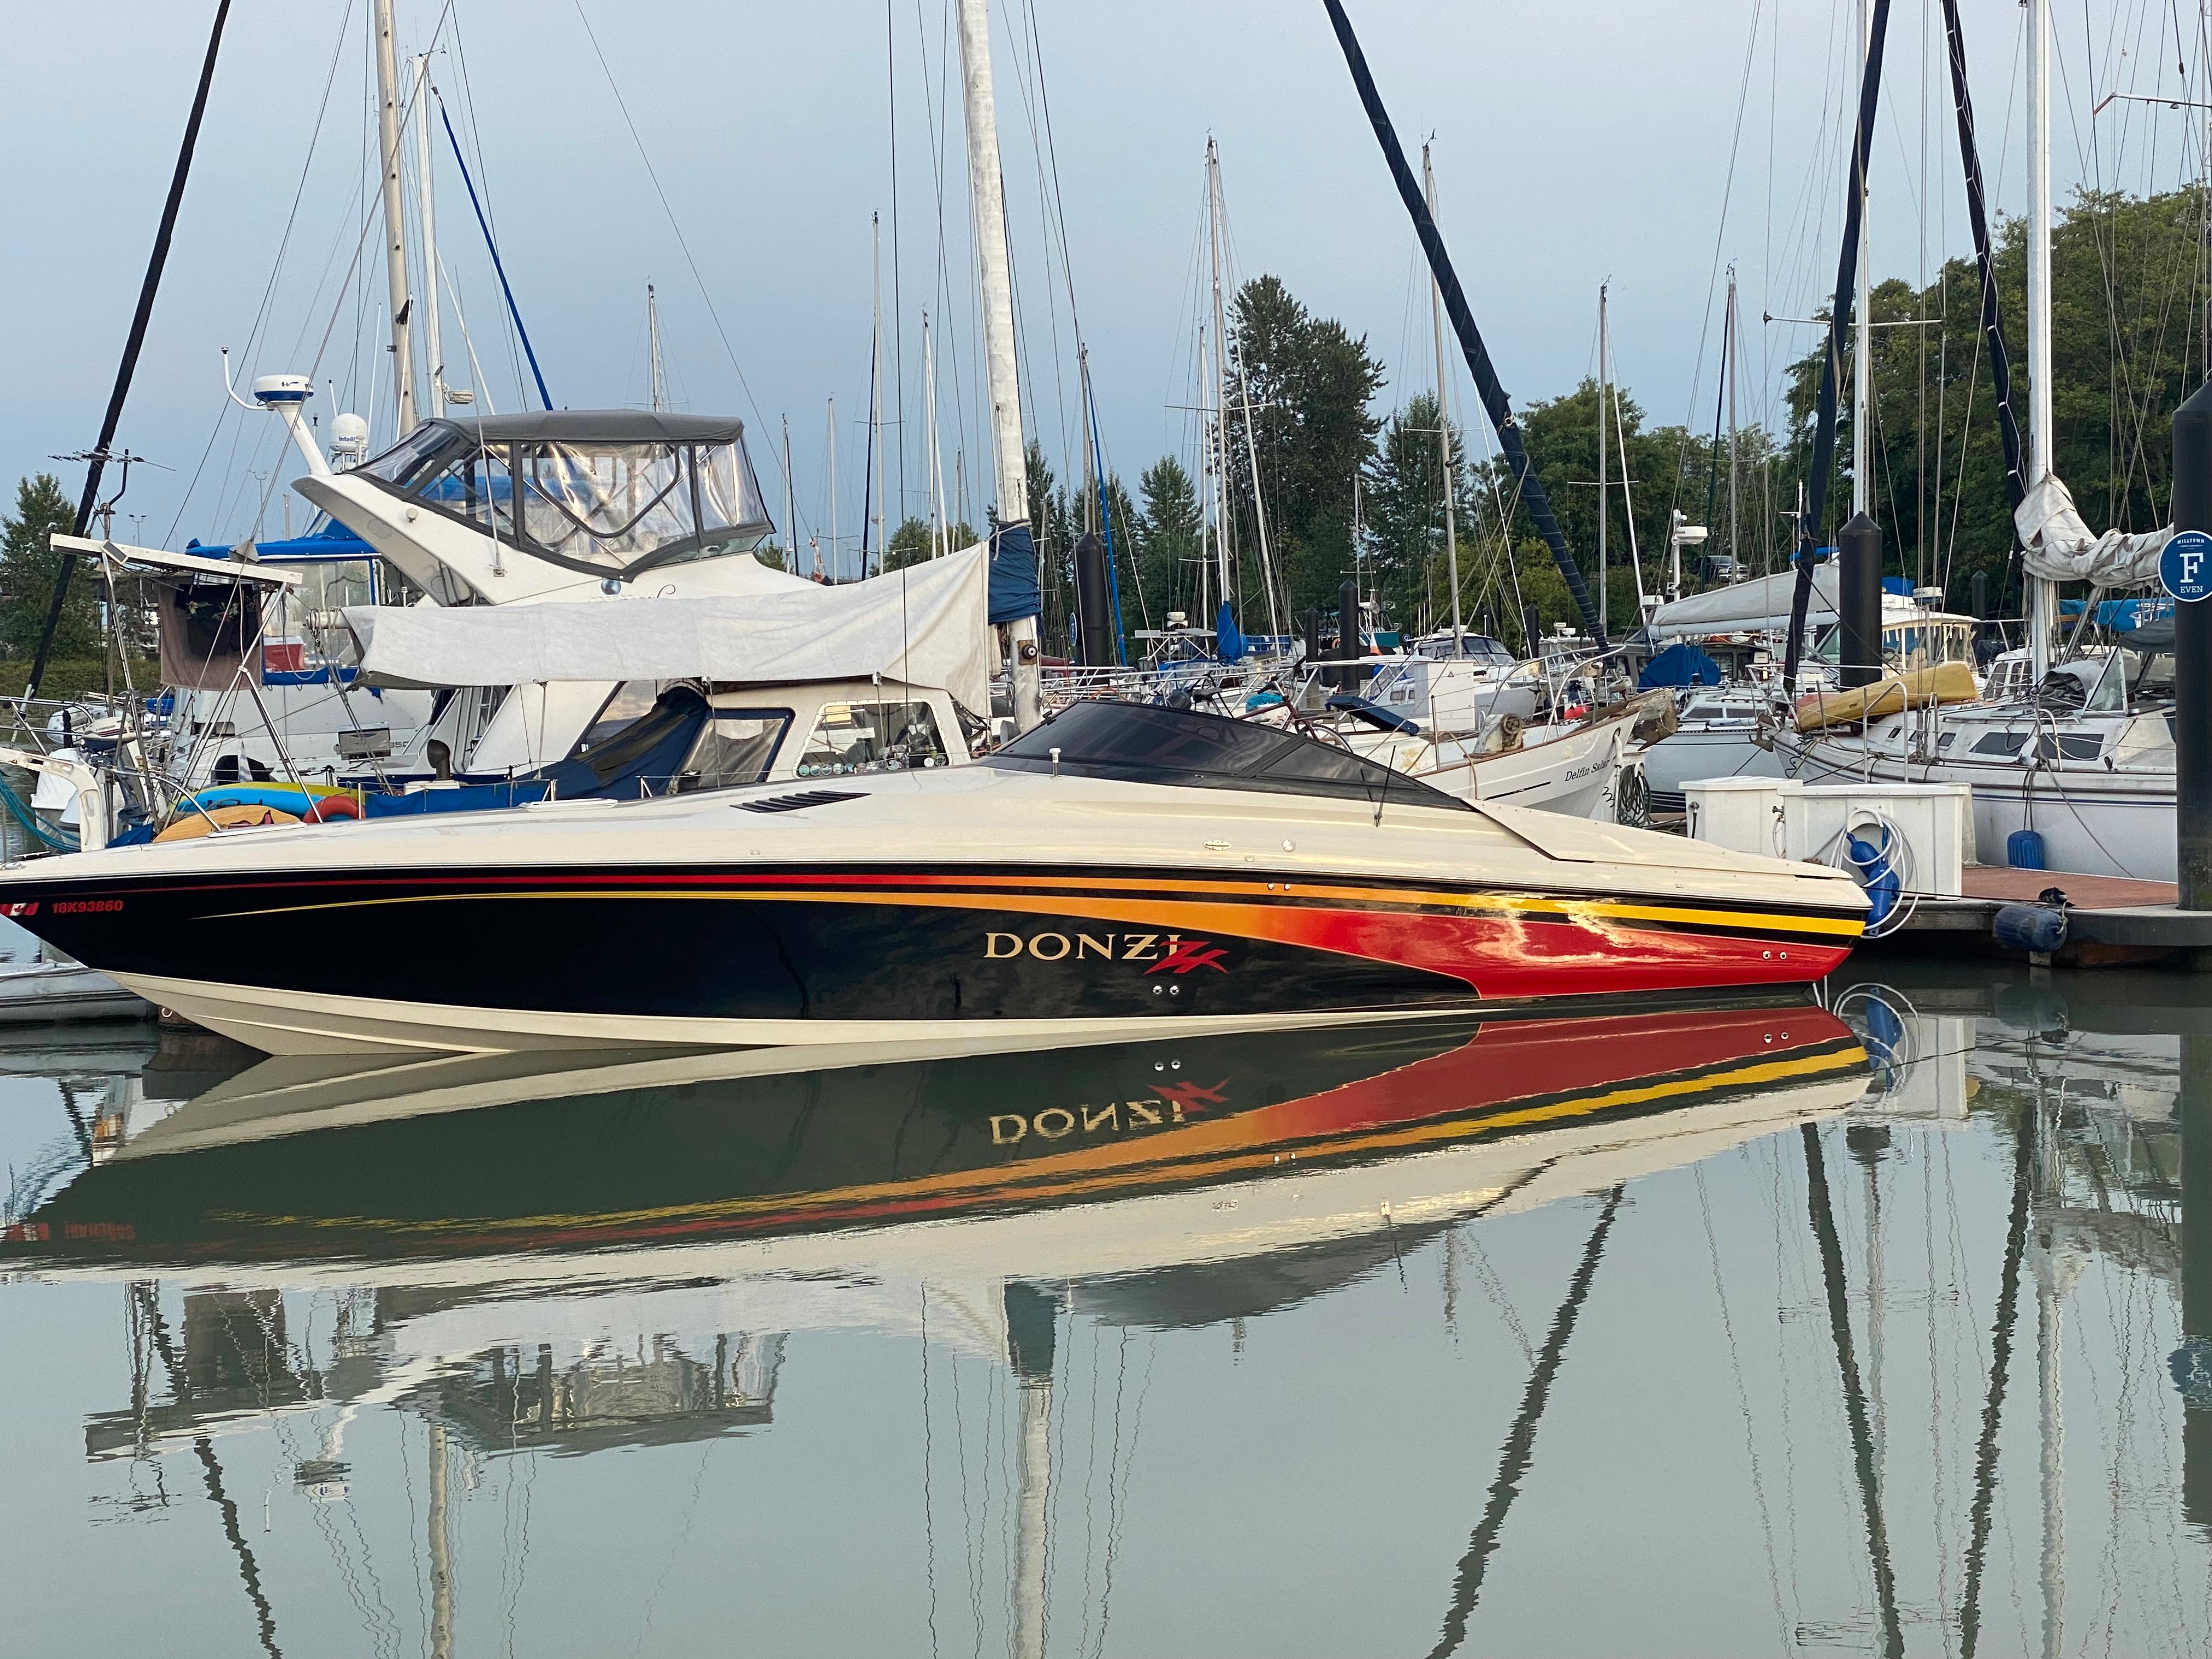 1996 Donzi 38 ZX, Vancouver British Columbia - boats.com